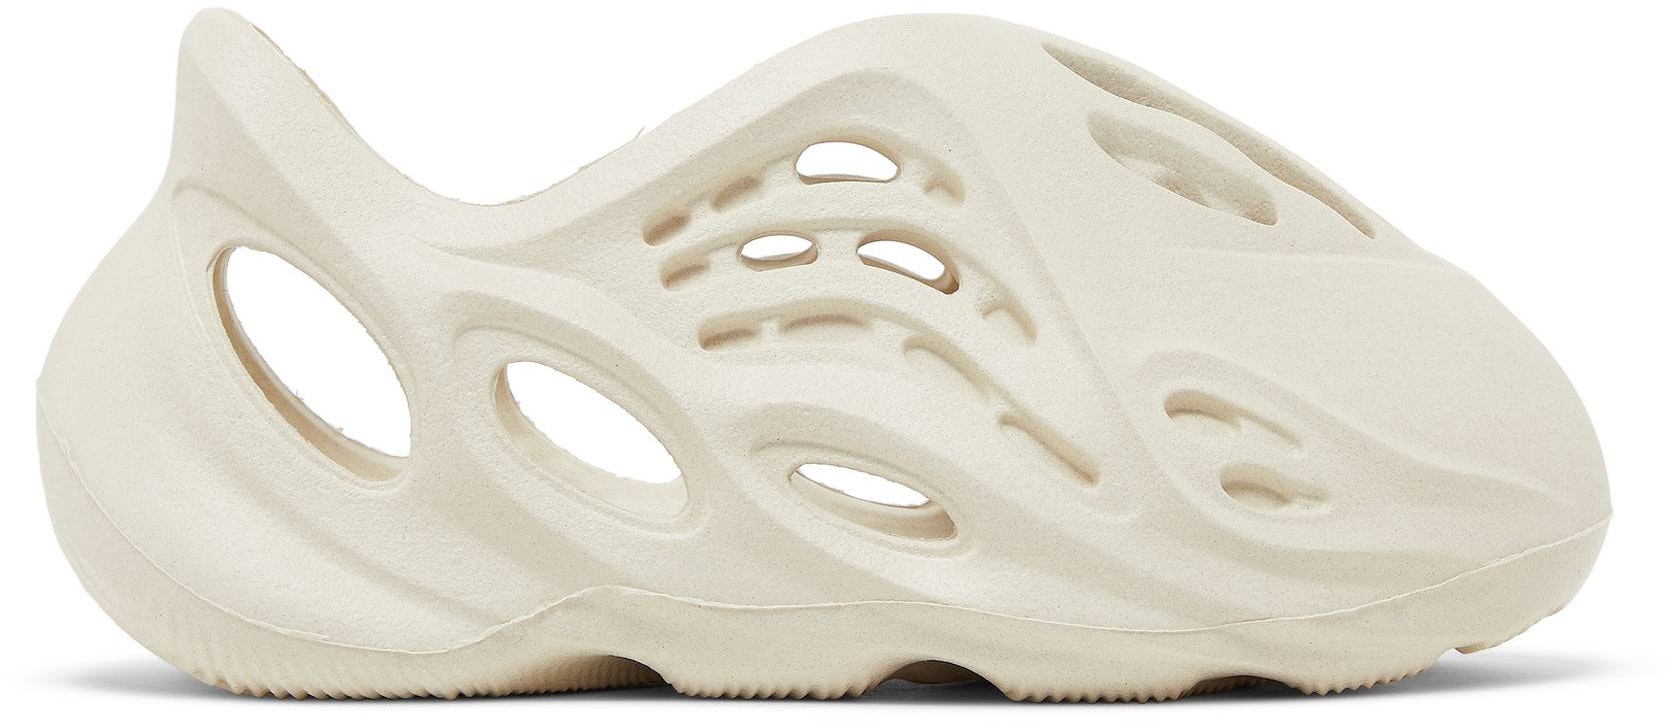 Preschool) adidas Yeezy Foam Runner 'Sand' GW7230 - GW7230 - Novelship